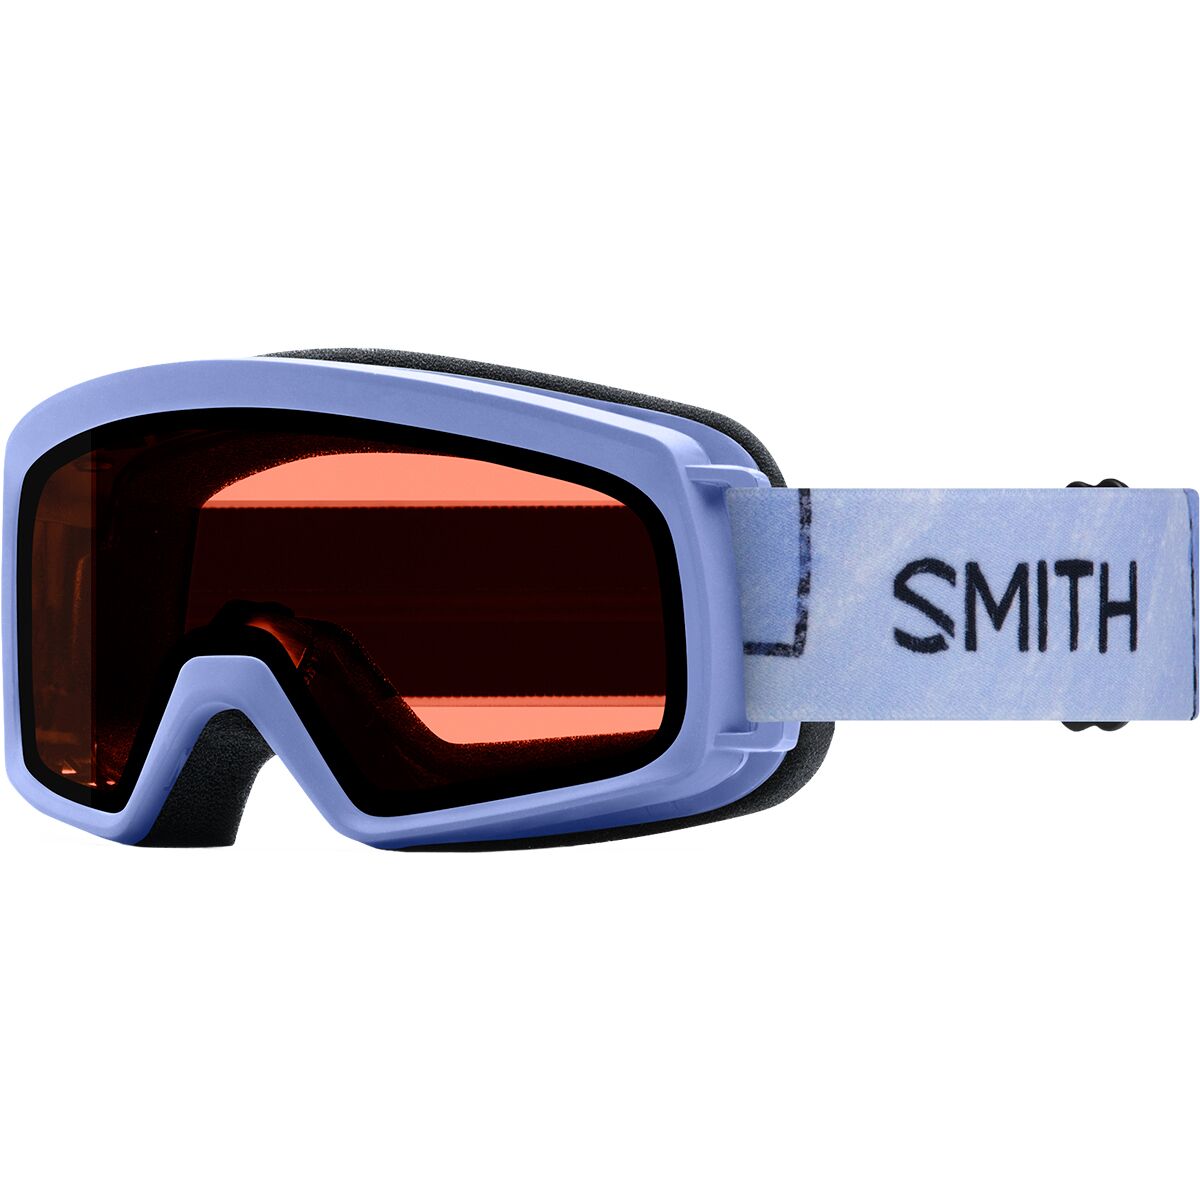 Smith Rascal Goggles - Kids' Crayola Periwinkle x Smith